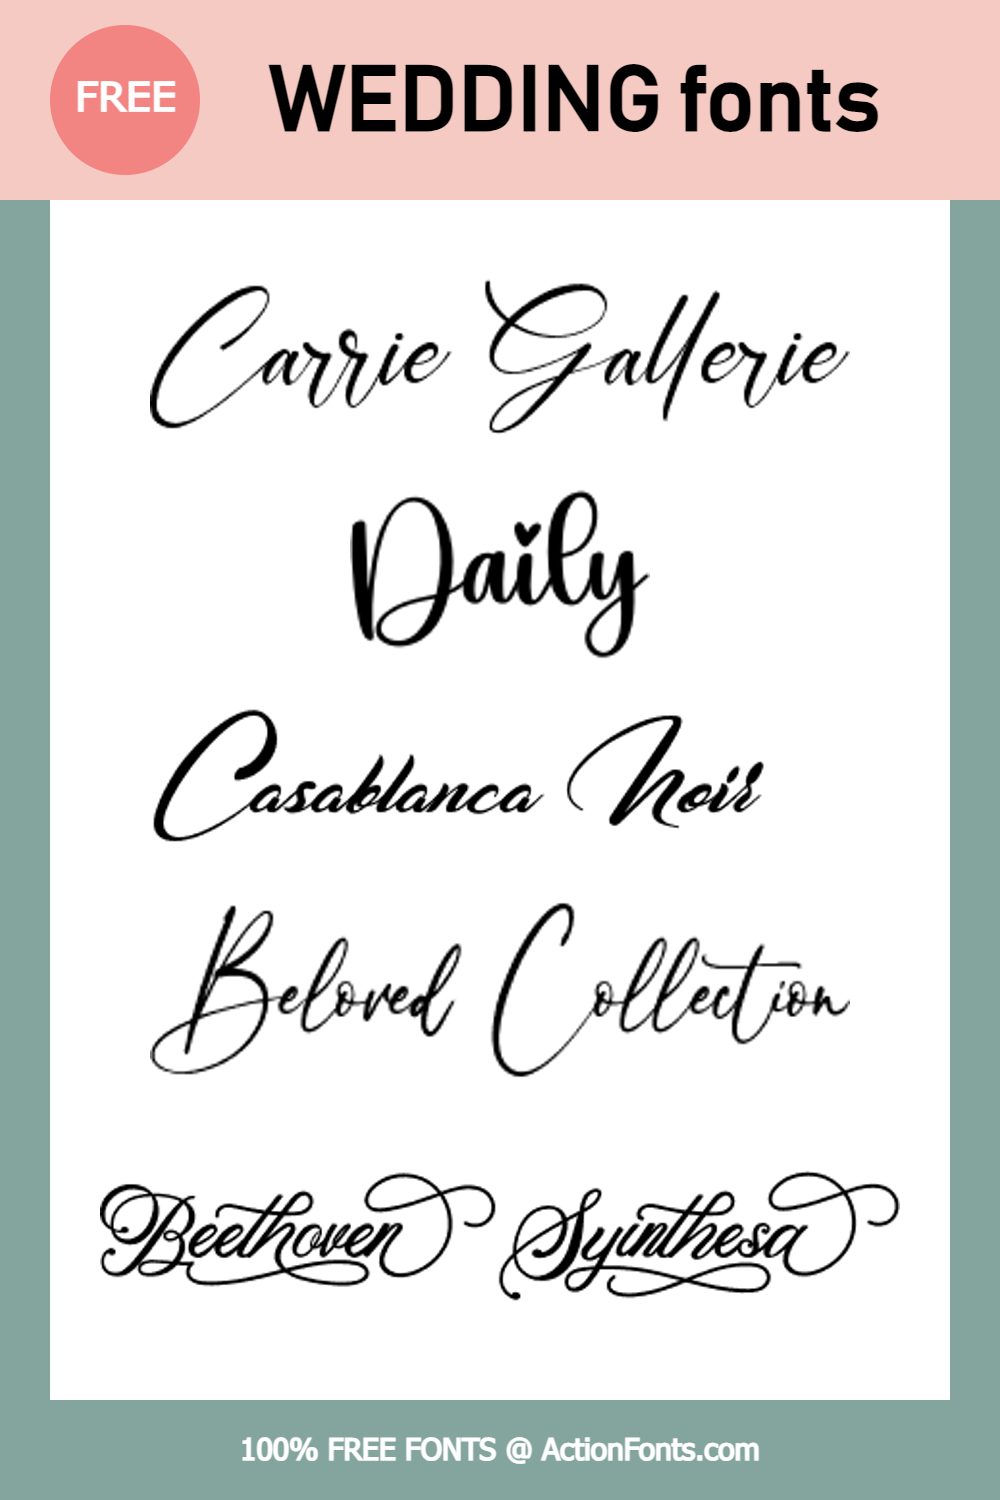 pinterest image of Wedding fonts